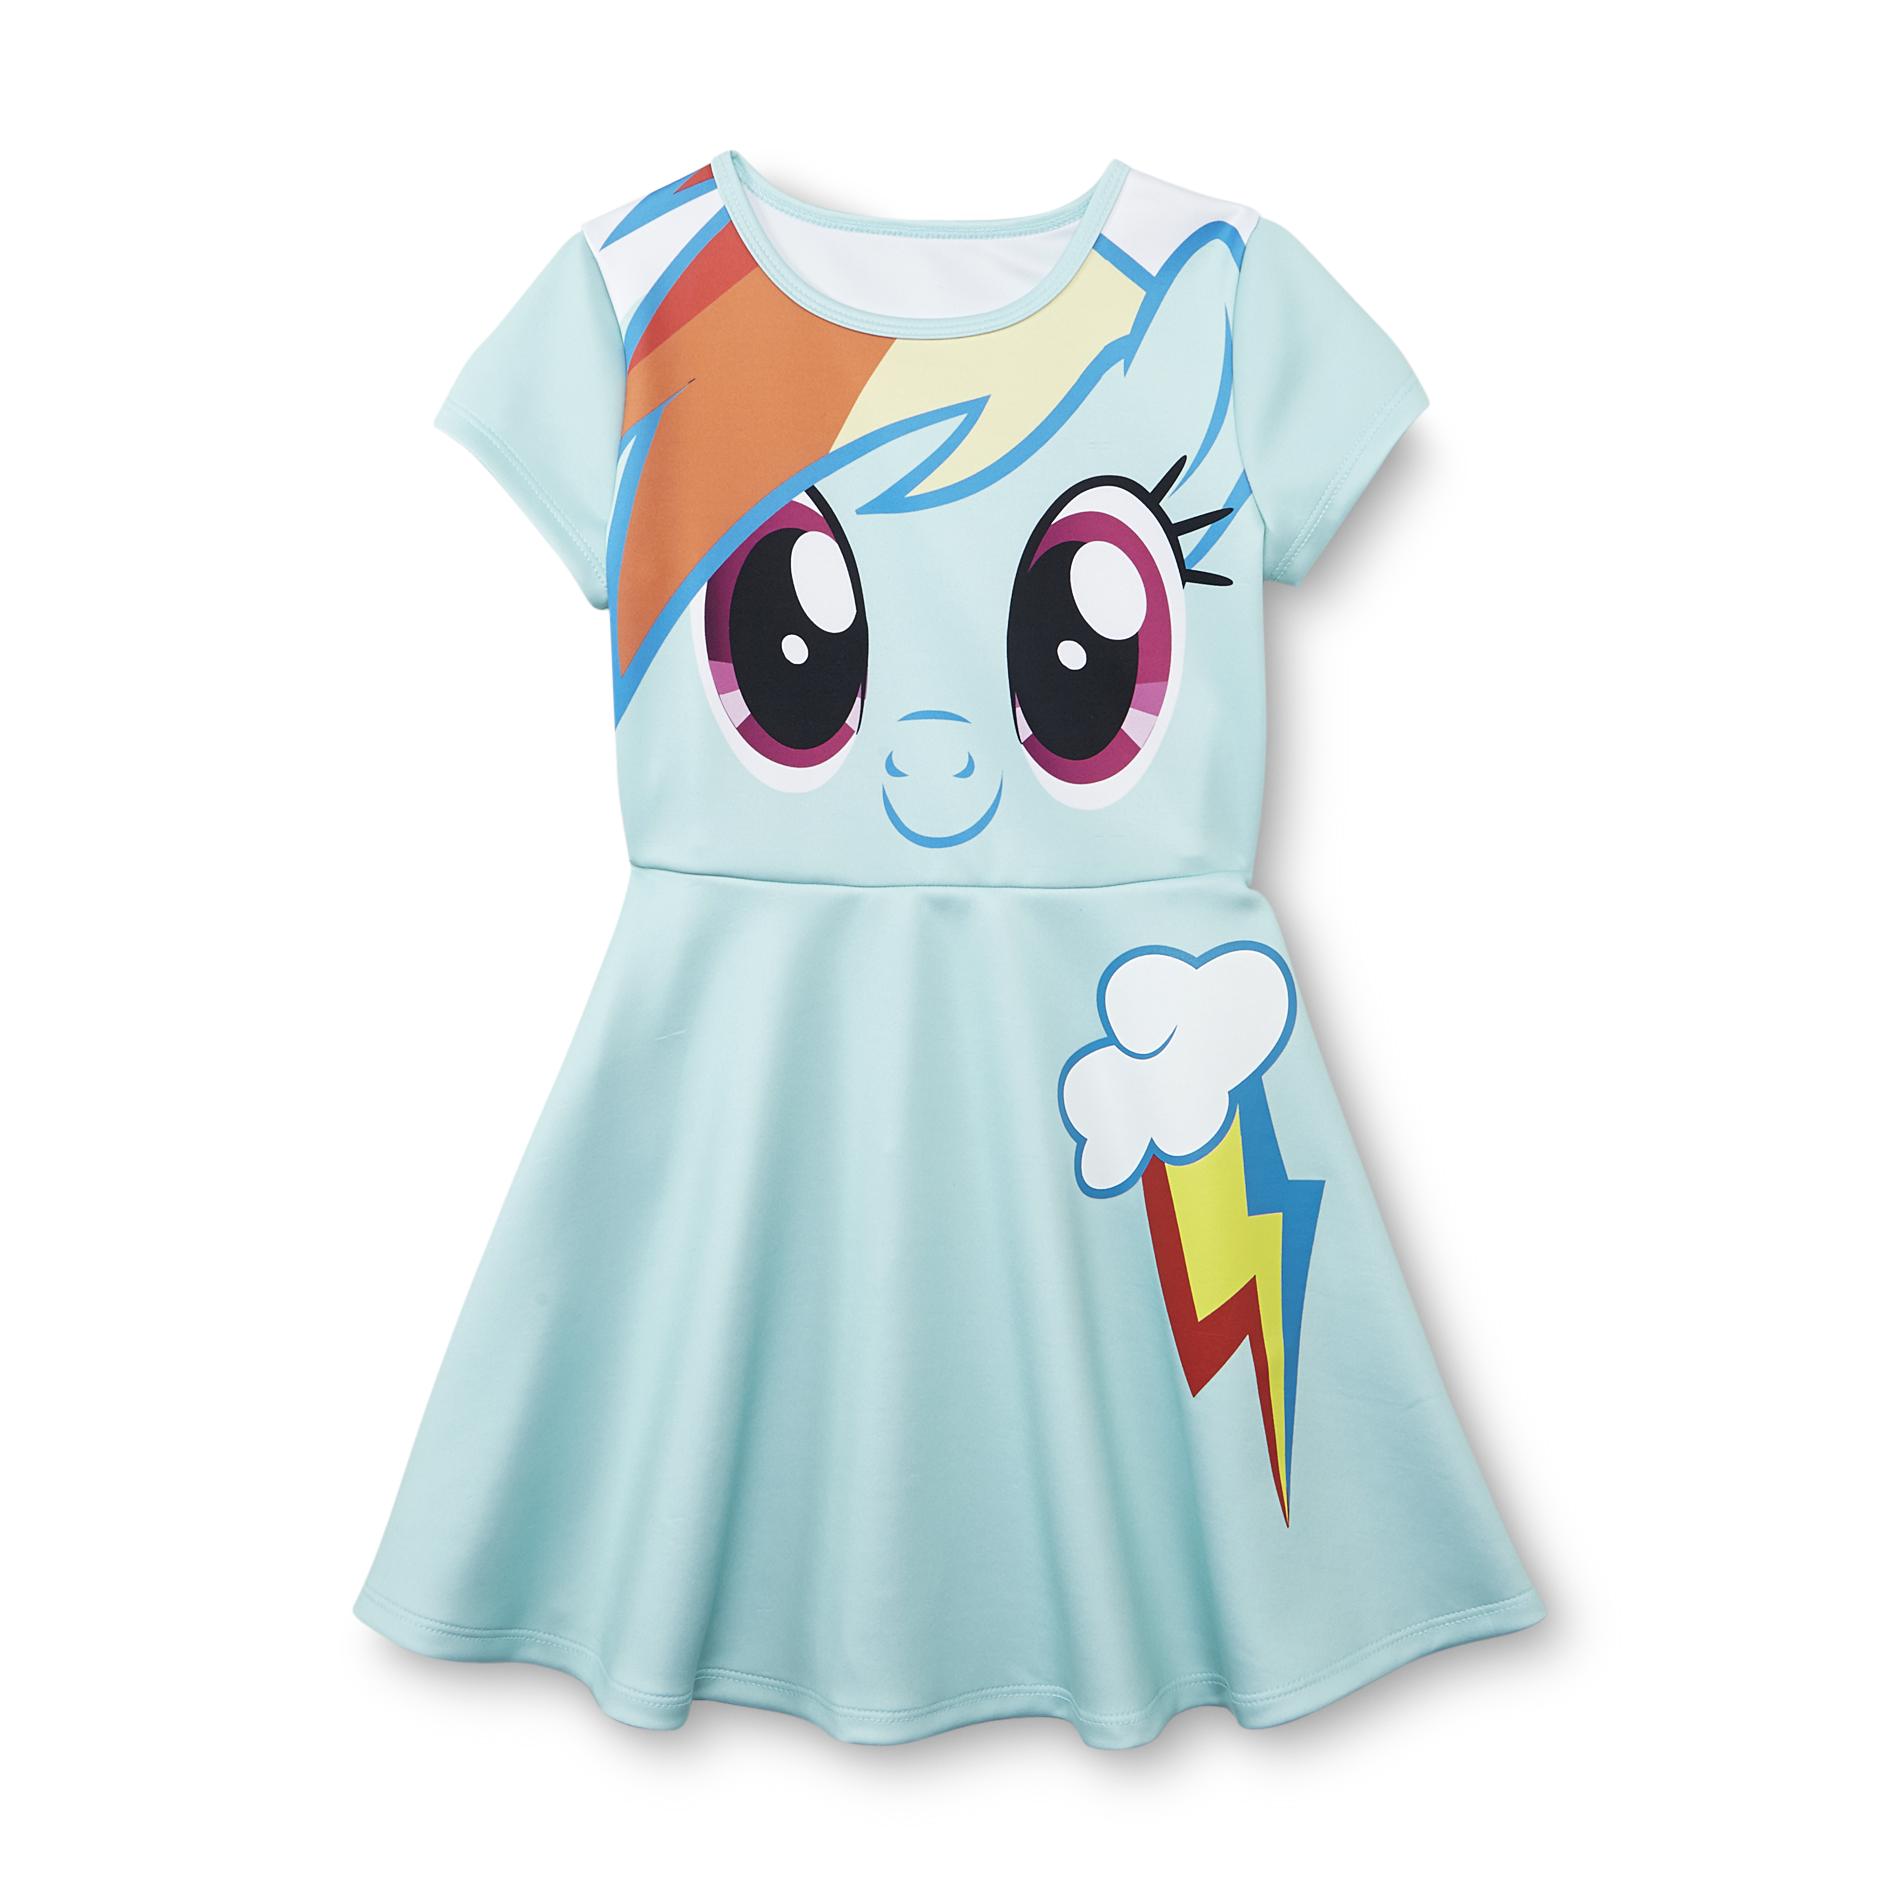 My Little Pony Girl's Dress - Rainbow Dash